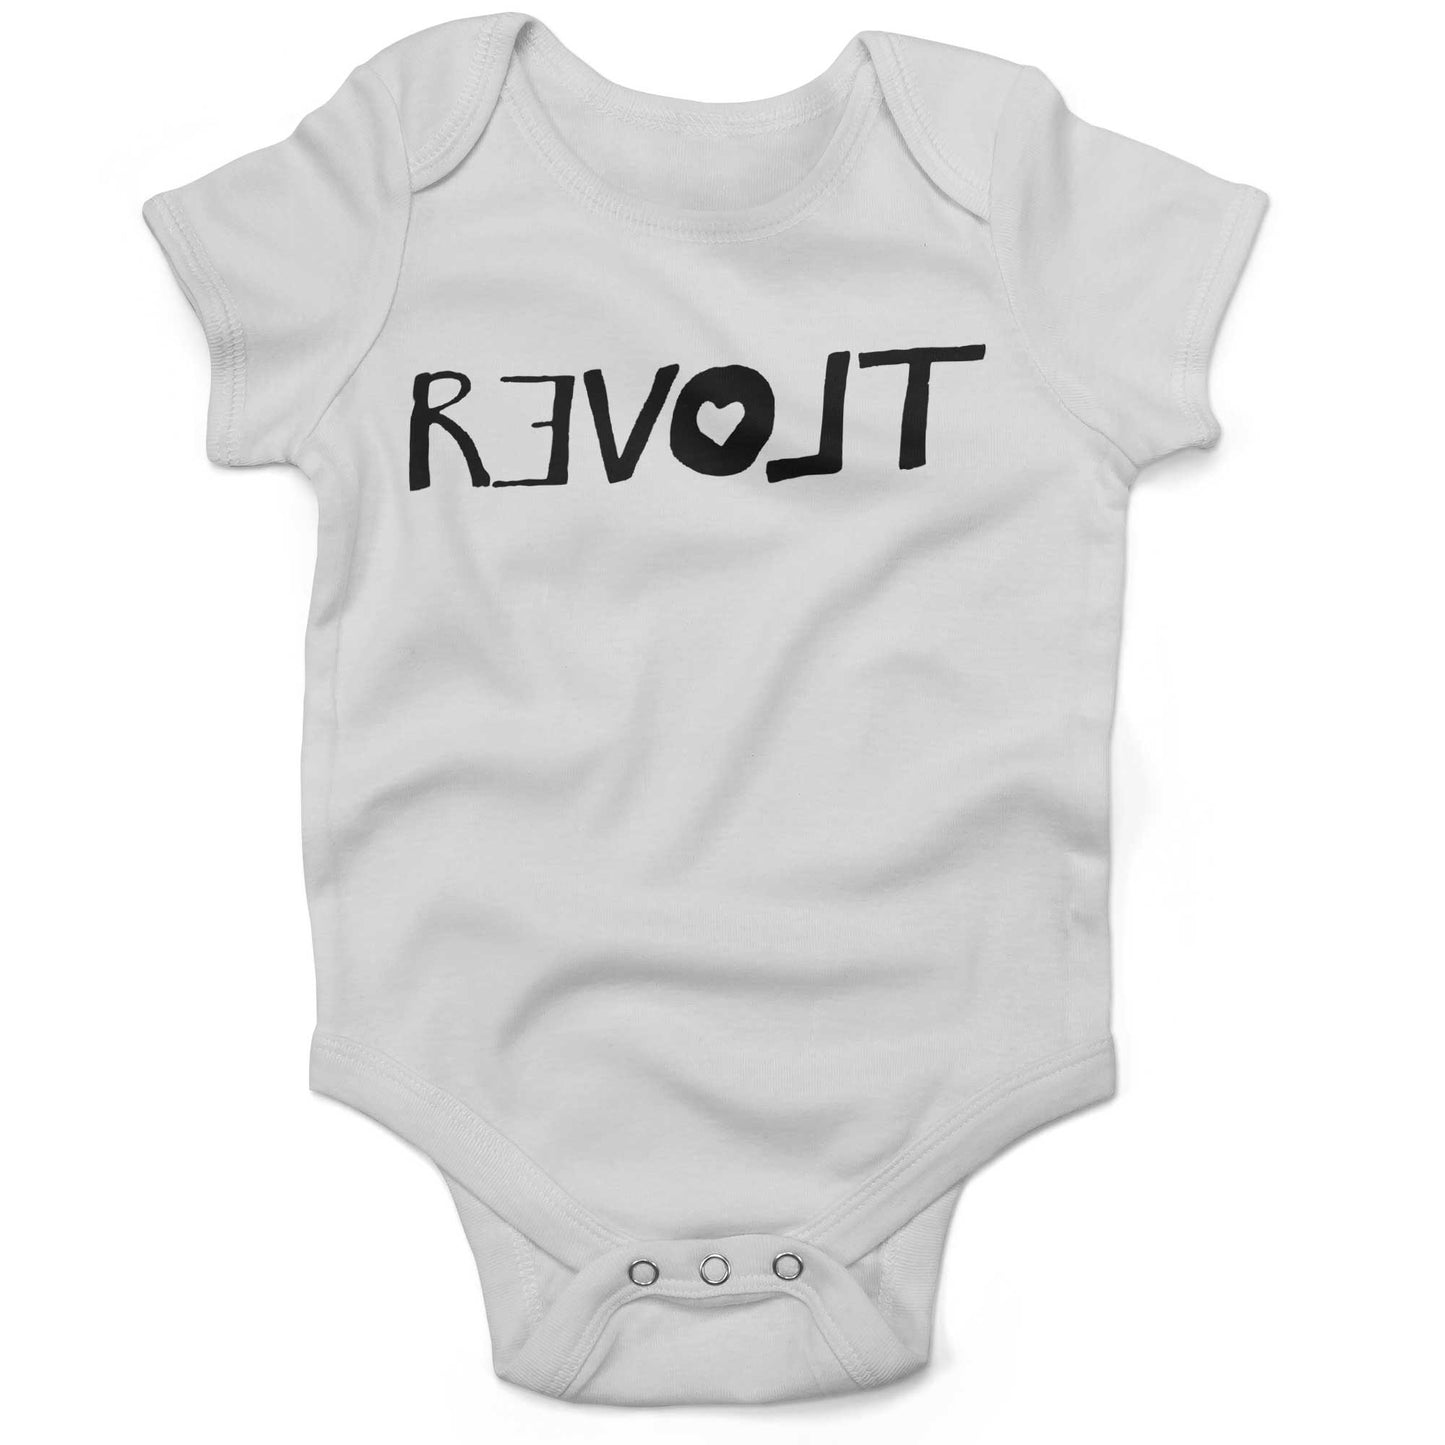 Revolt Infant Bodysuit or Raglan Baby Tee-White-3-6 months